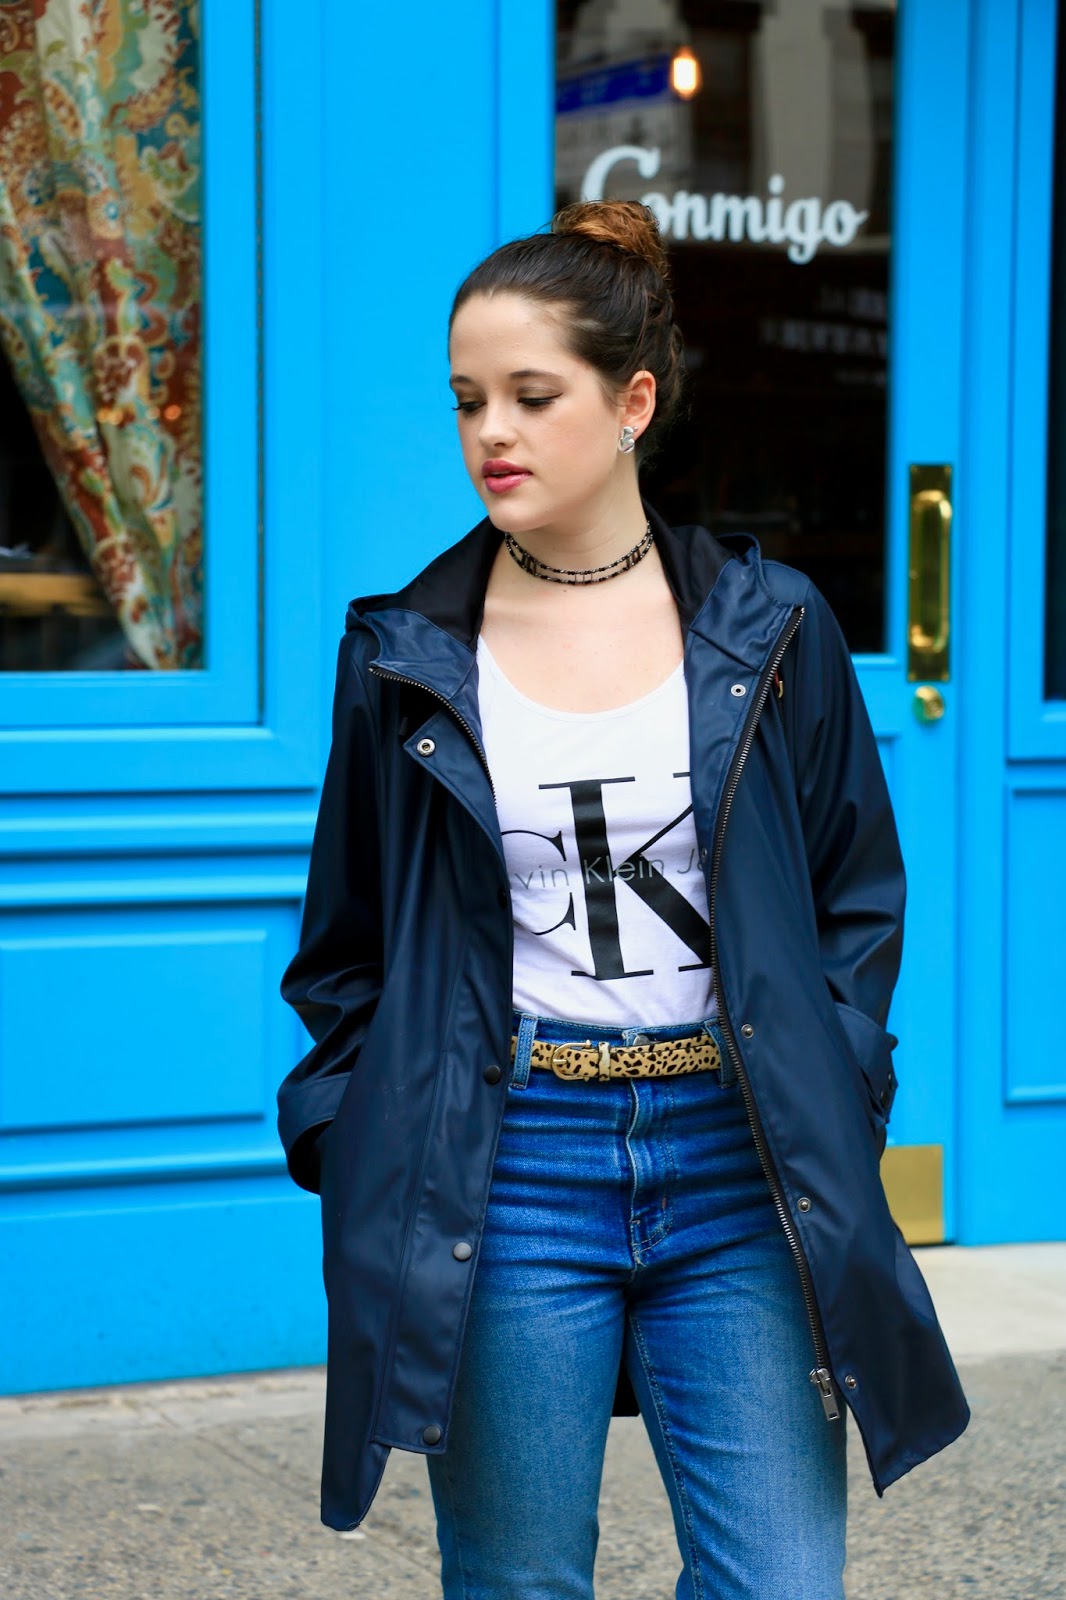 NYC fashion blogger Kathleen Harper wearing Zara rain jacket with high-waisted jeans